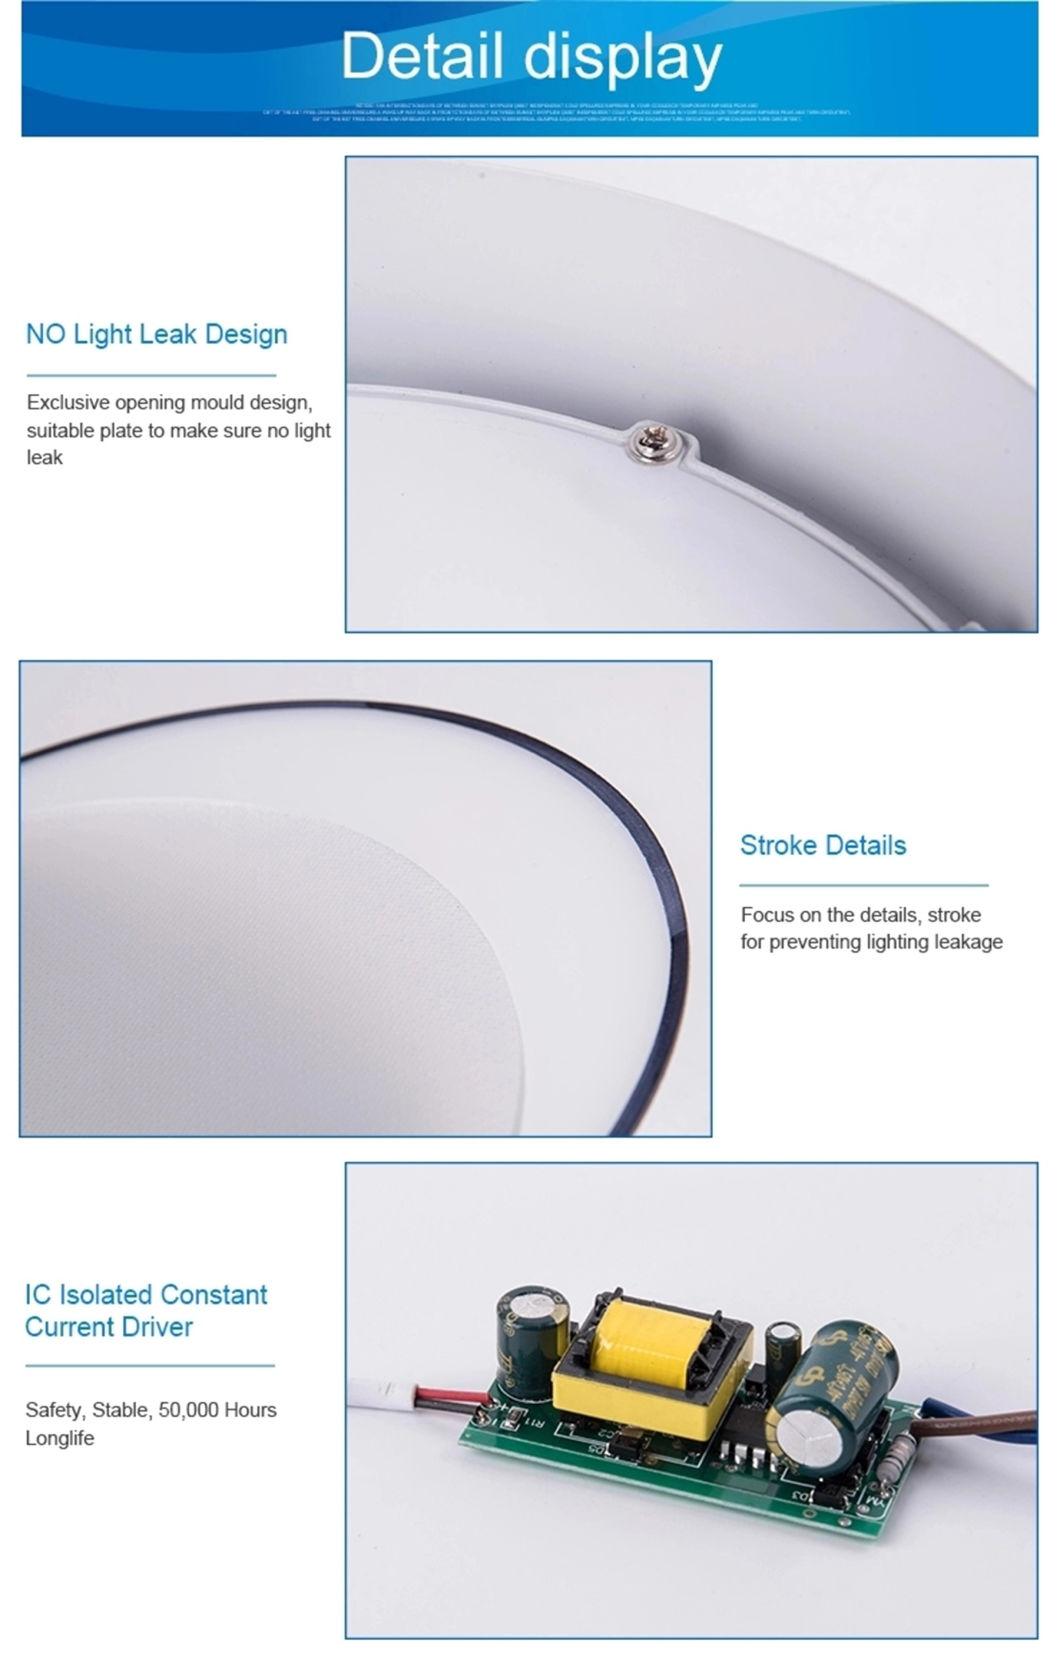 LED Ceiling Slim Round Panel Light Amazon LED Recessed Slim Panel Lights